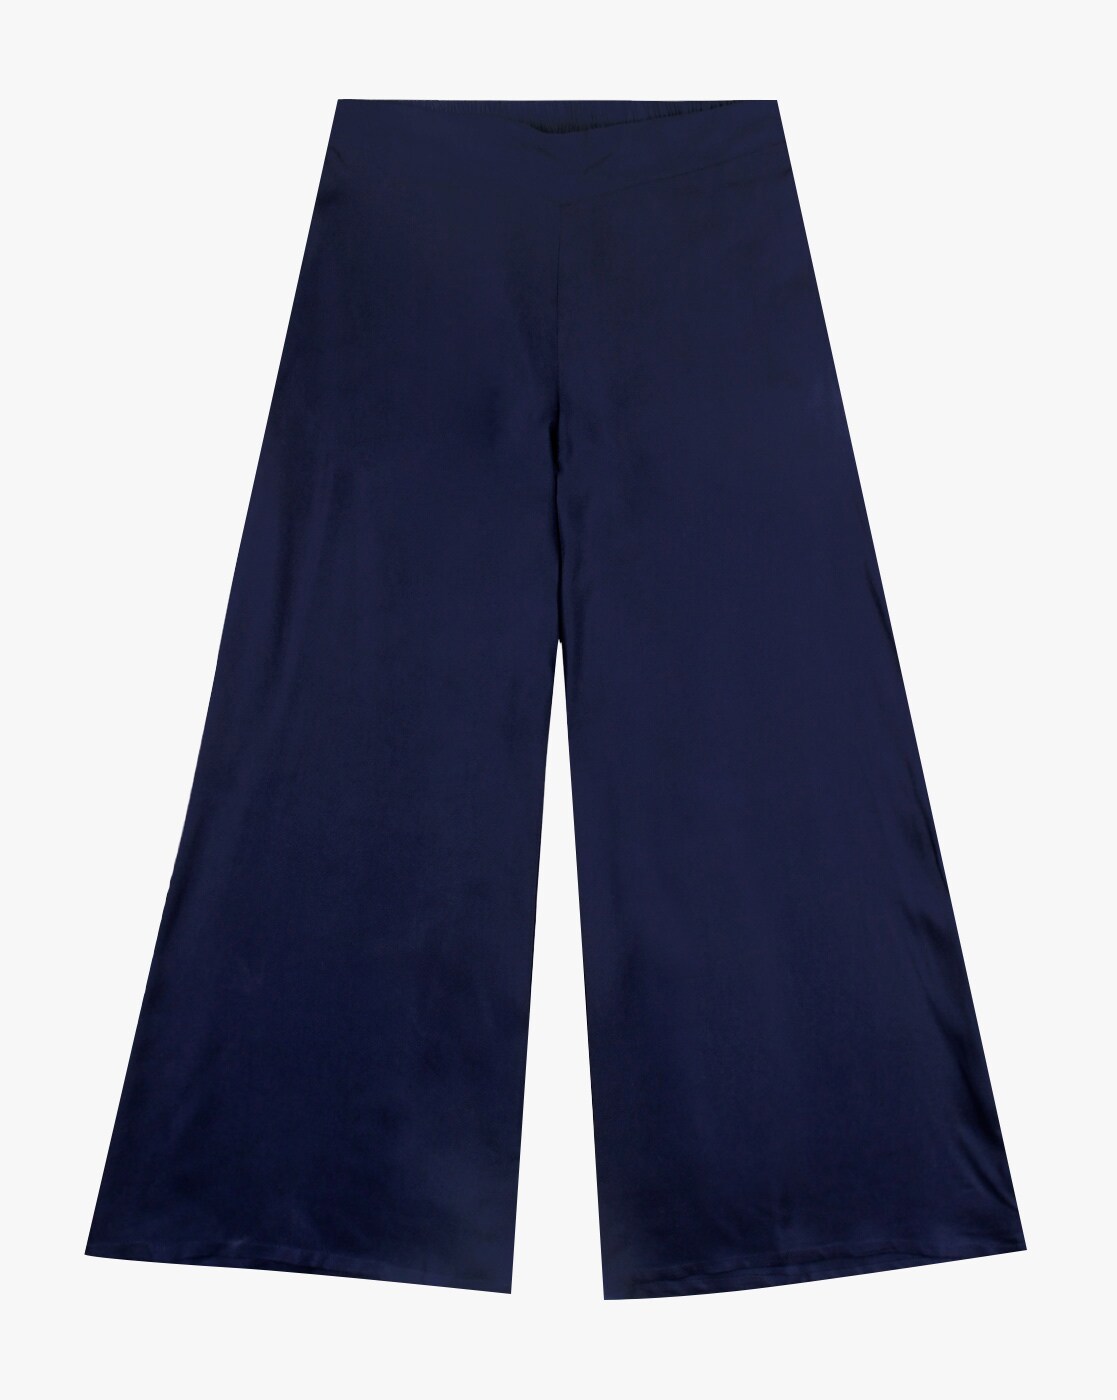 Joseph Ribkoff Midnight Blue Wide Leg Pull On Pants Style 234010